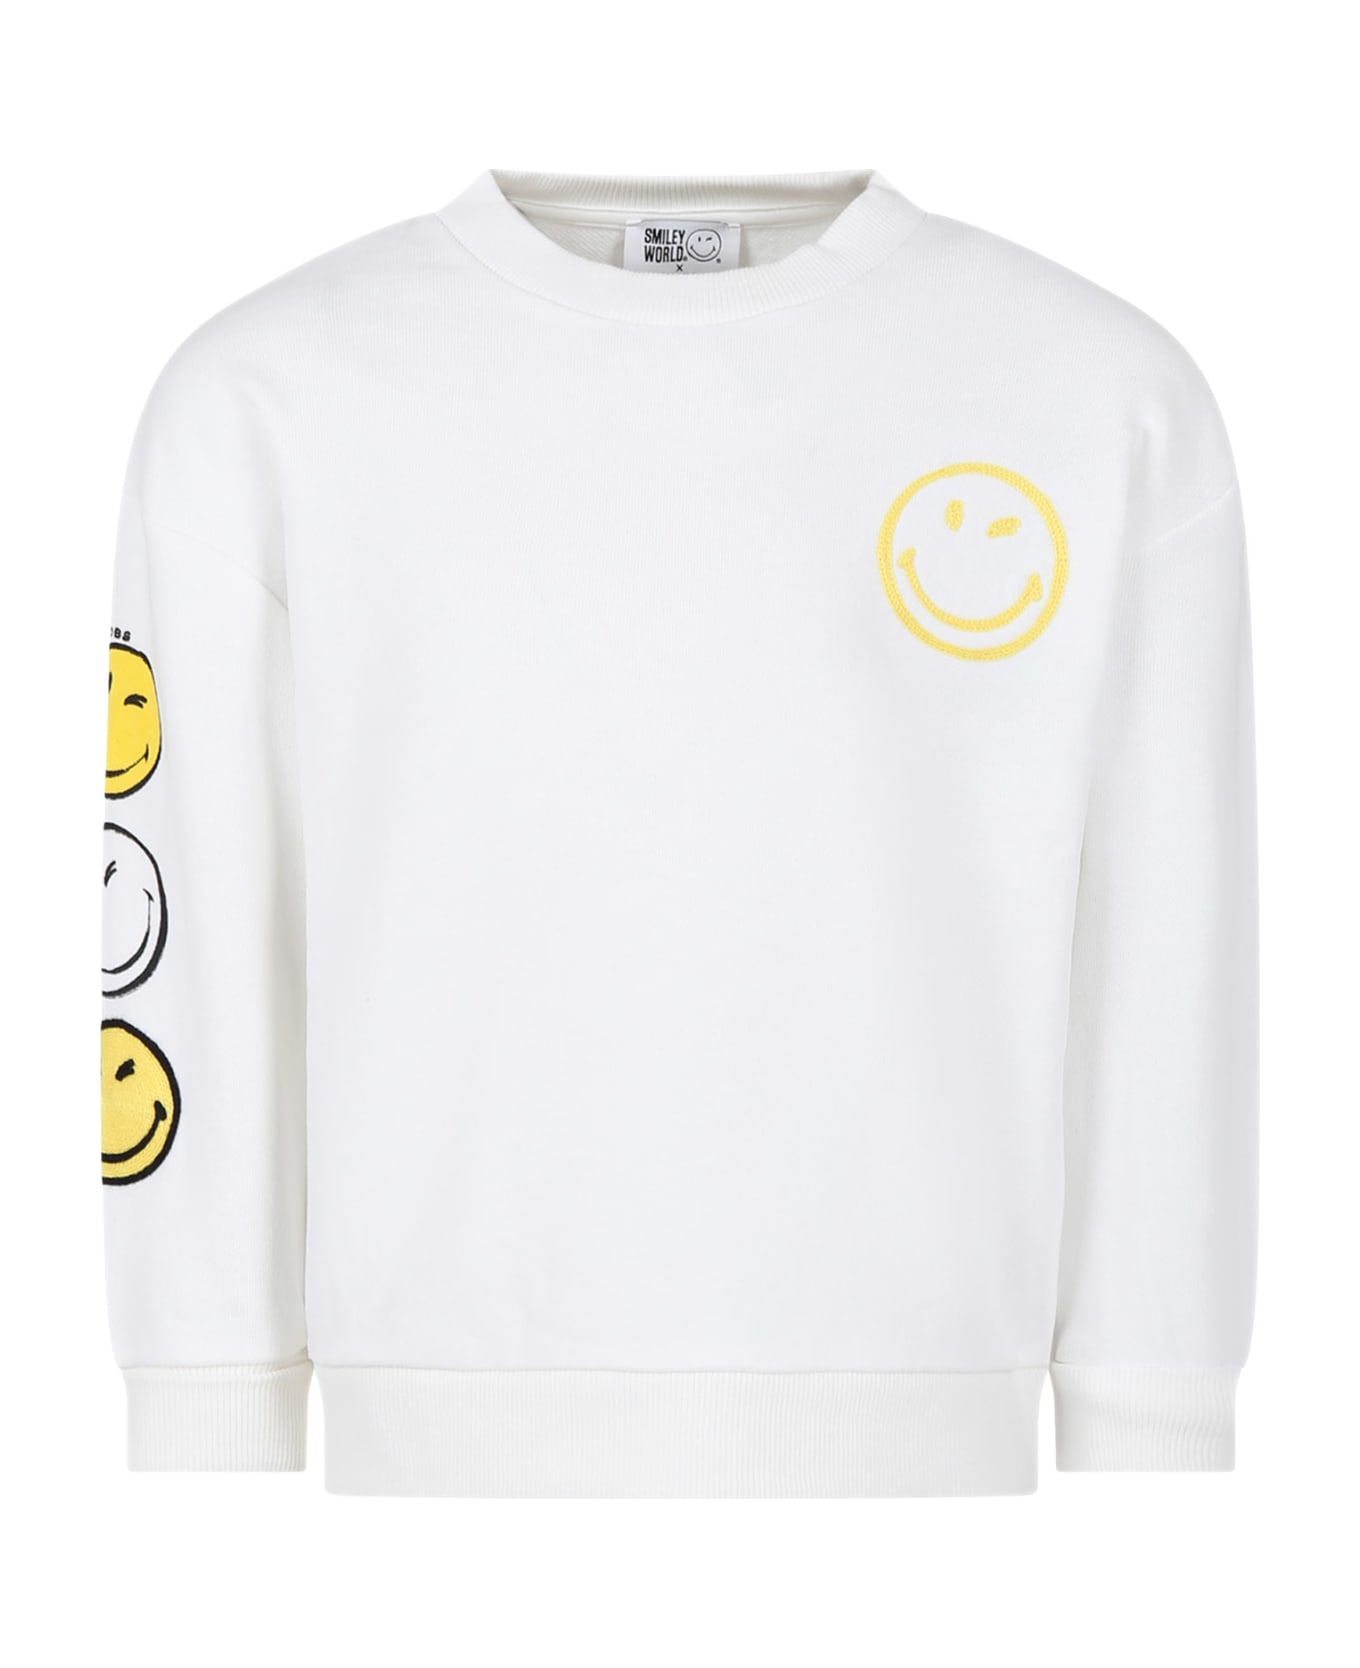 Marc Jacobs White Sweatshirt For Boy With Smiley And Logo - White ニットウェア＆スウェットシャツ